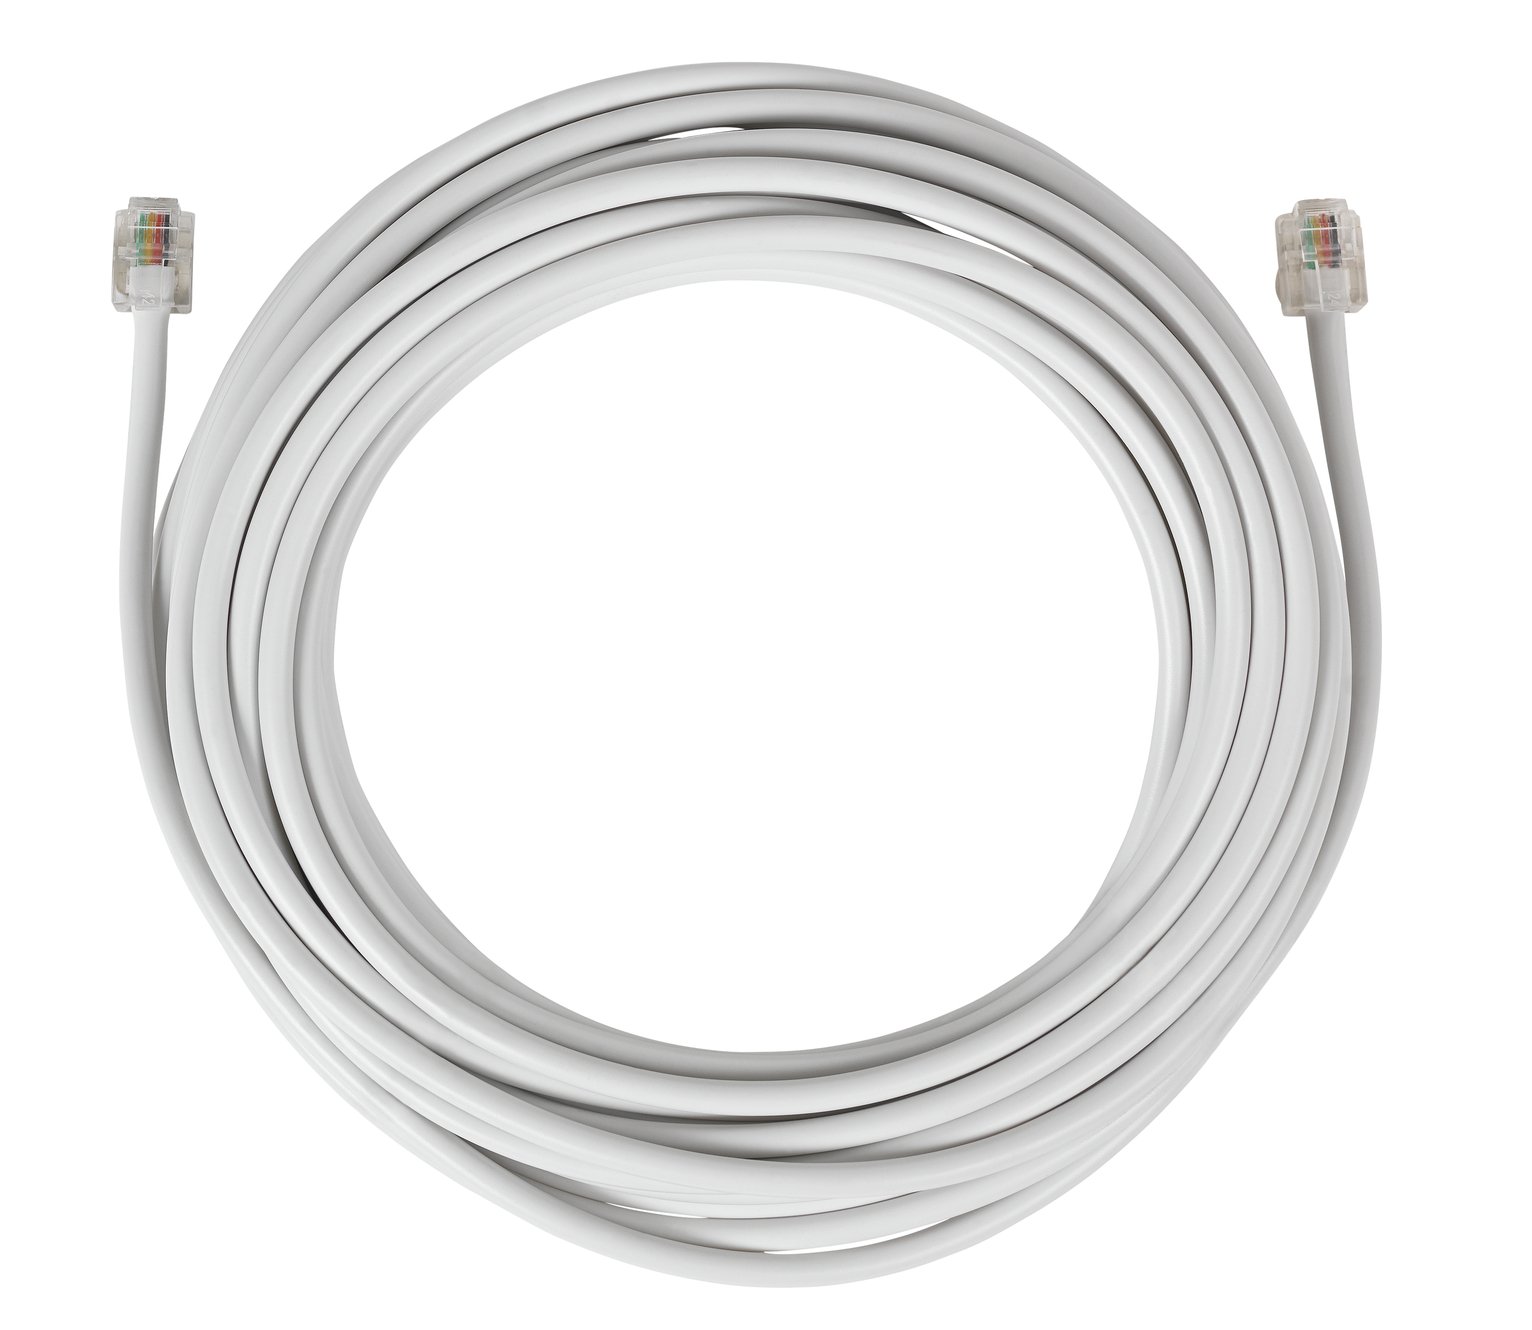 ADSL 10m Modem Cable Review